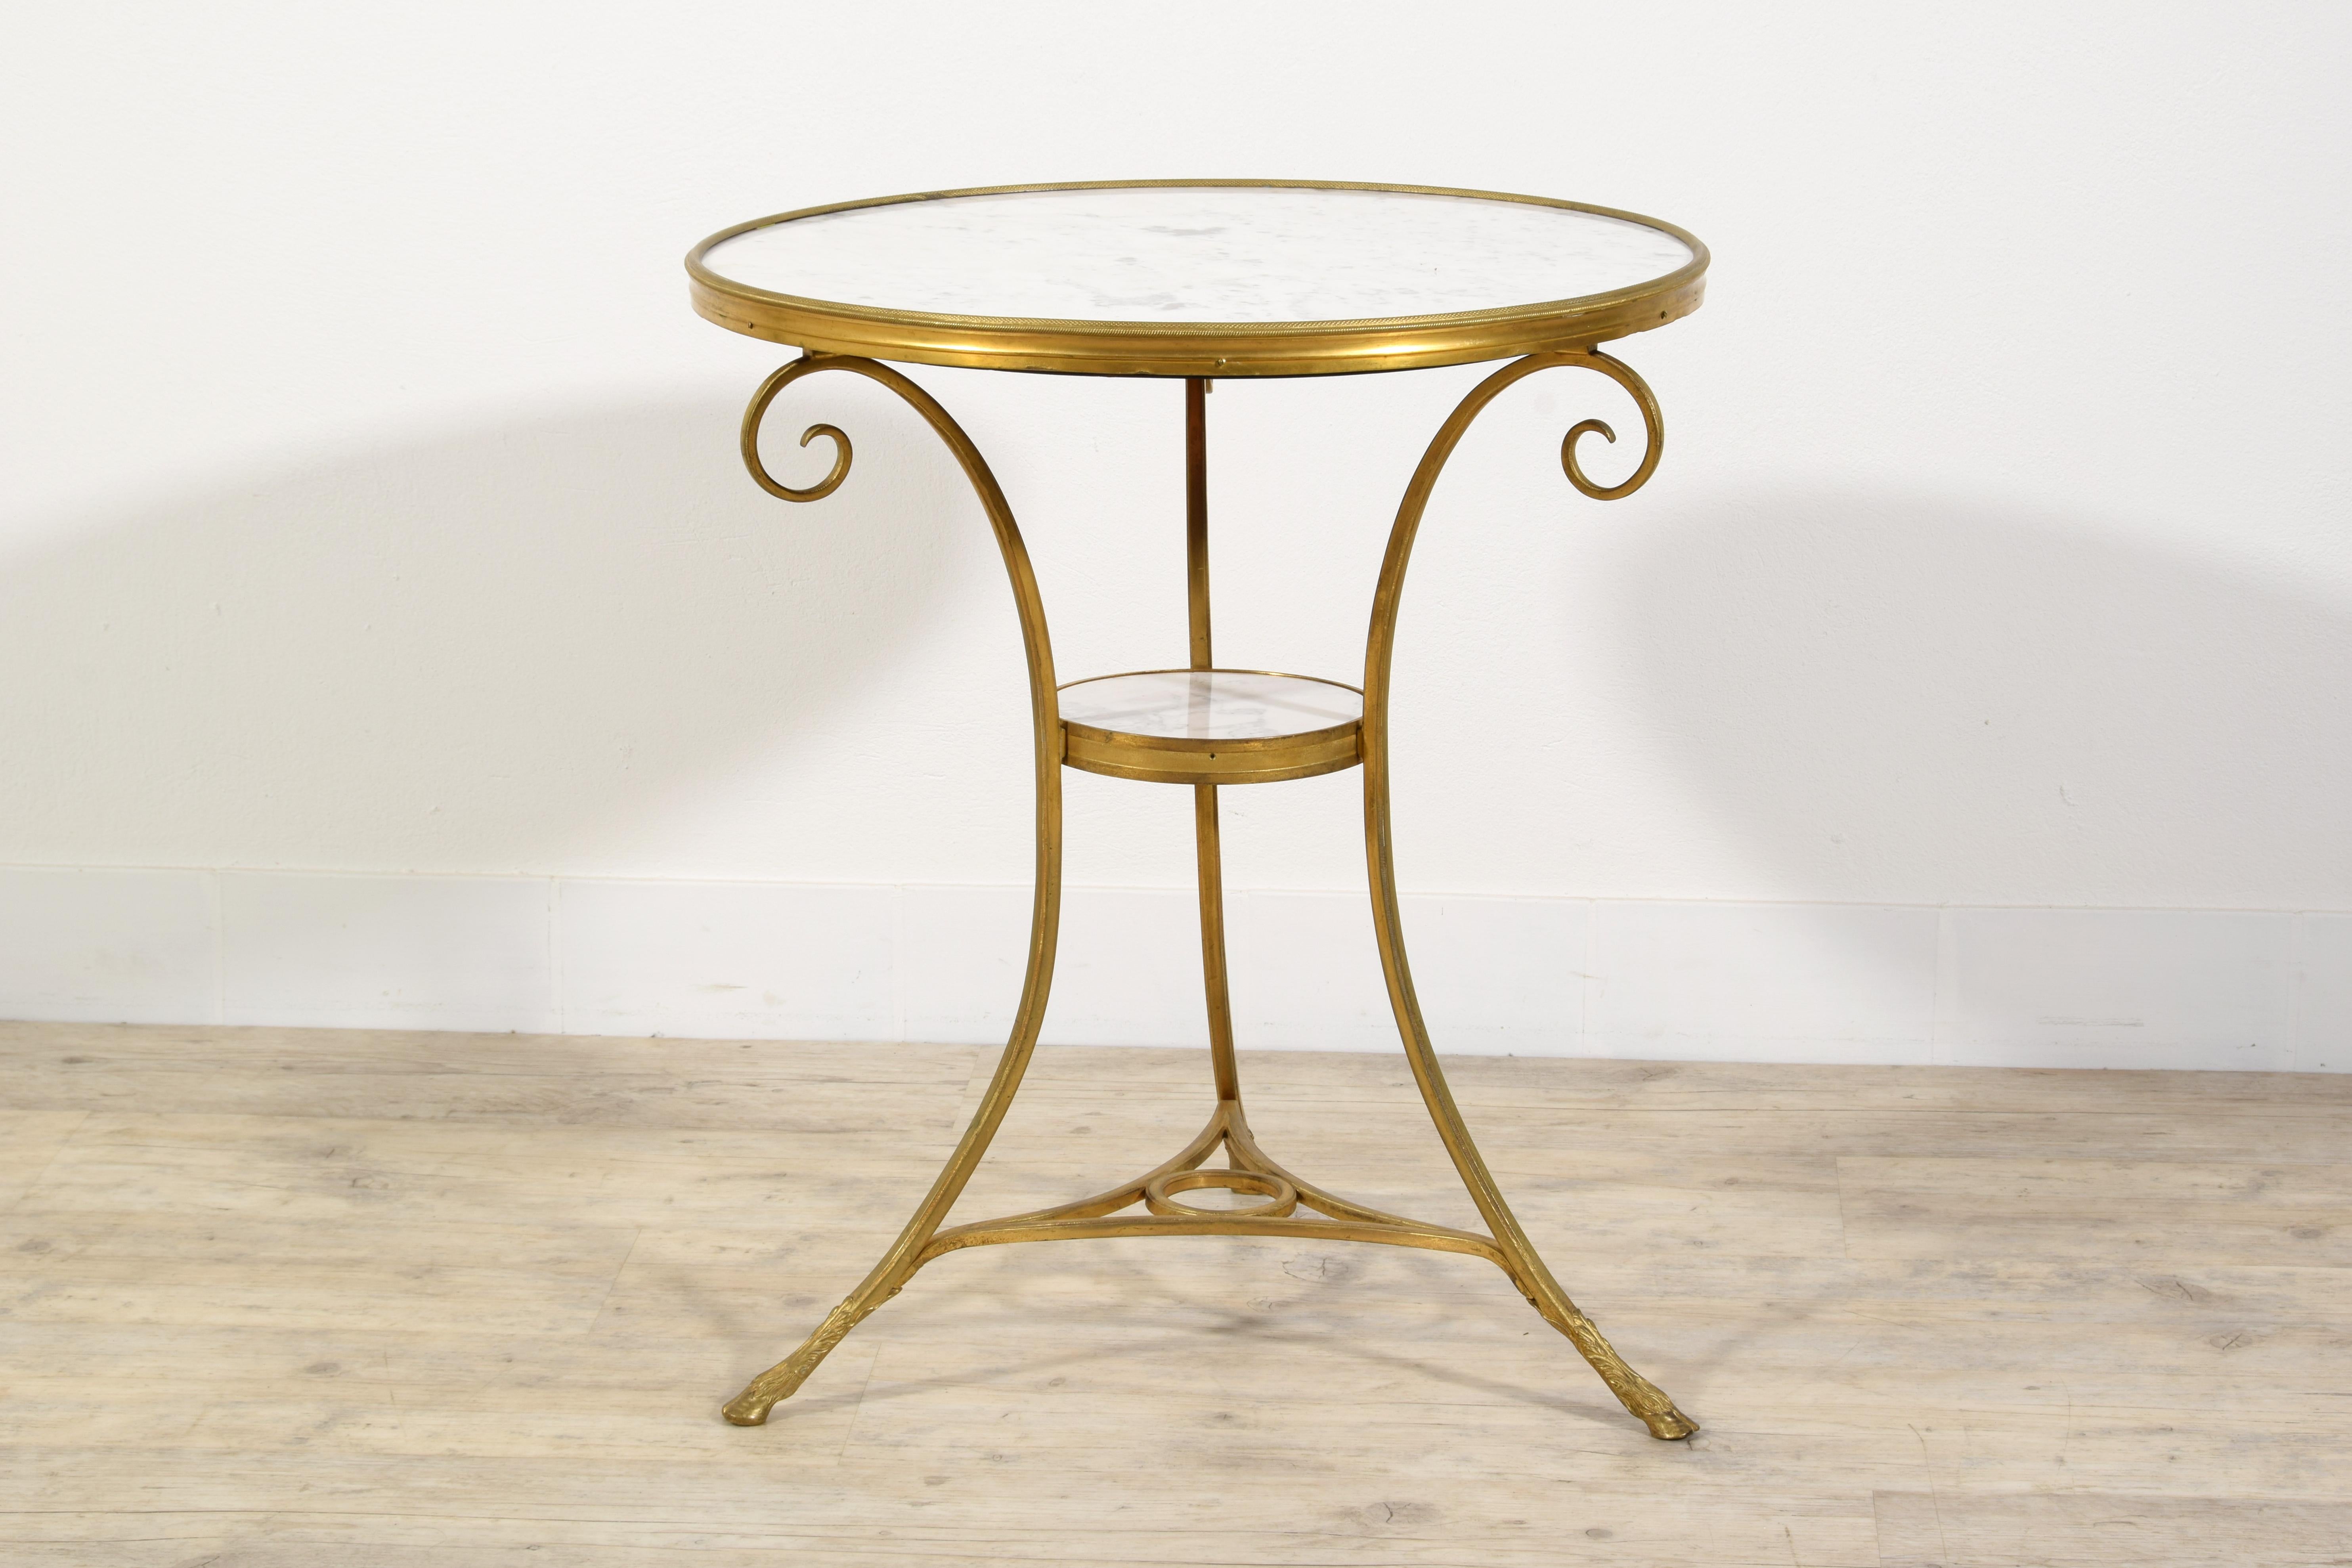 19th Century, Louis XVI Style French Gilt Bronze Tripod Coffee Table or Guéridon For Sale 13